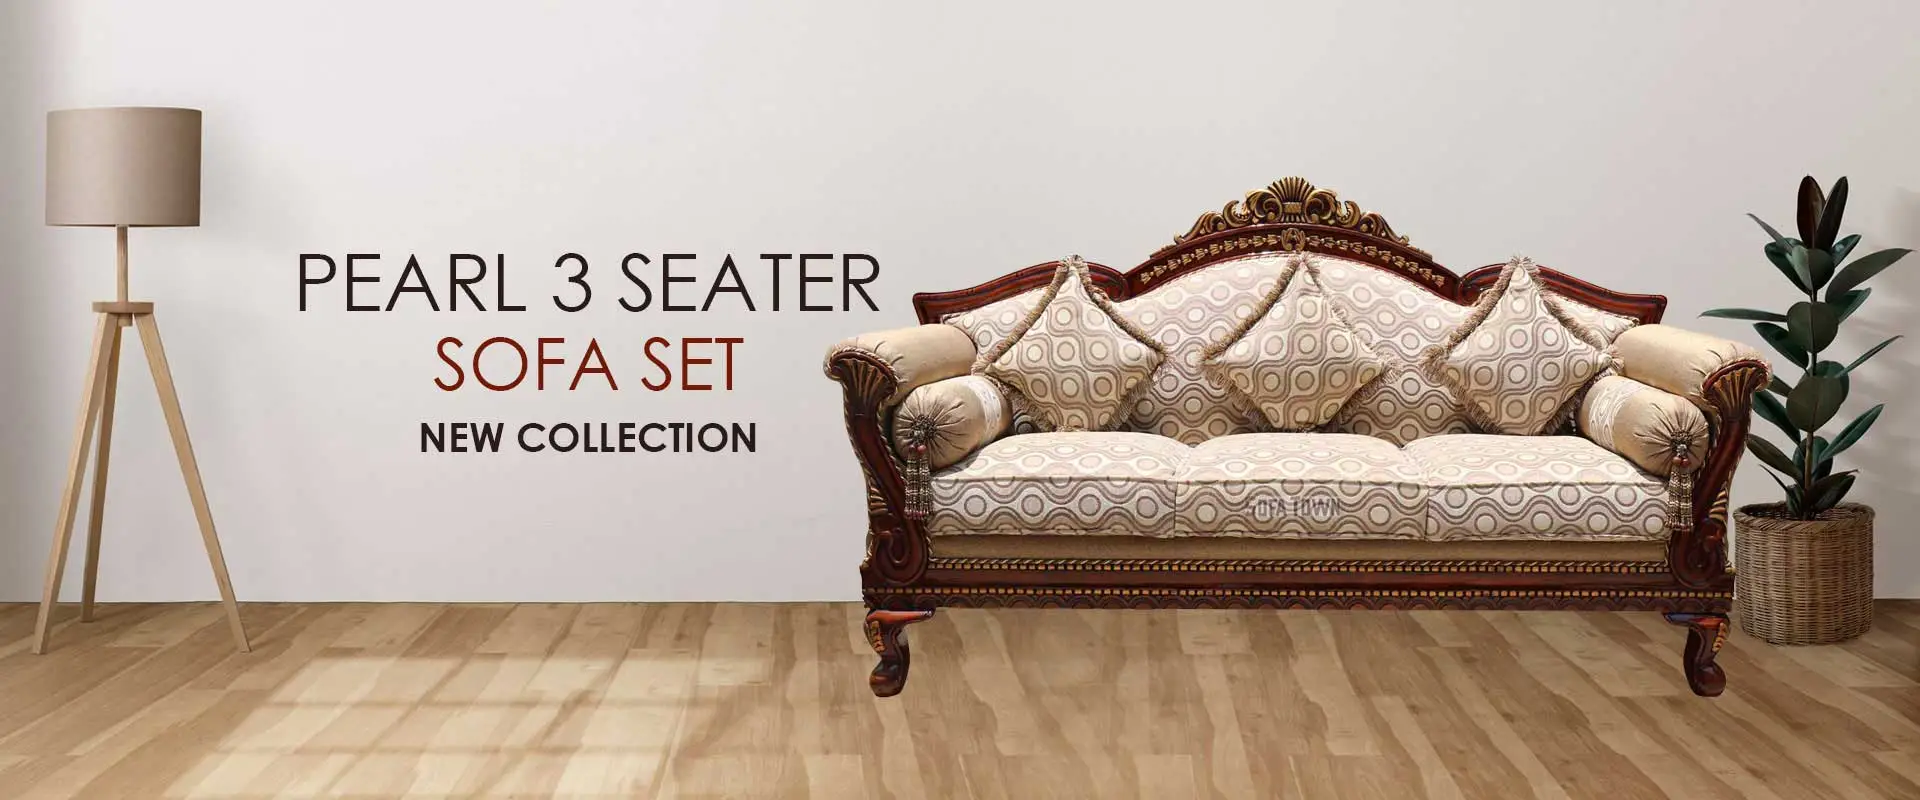 Pearl 3 Seater Sofa Set  Manufacturers in Narayanpur